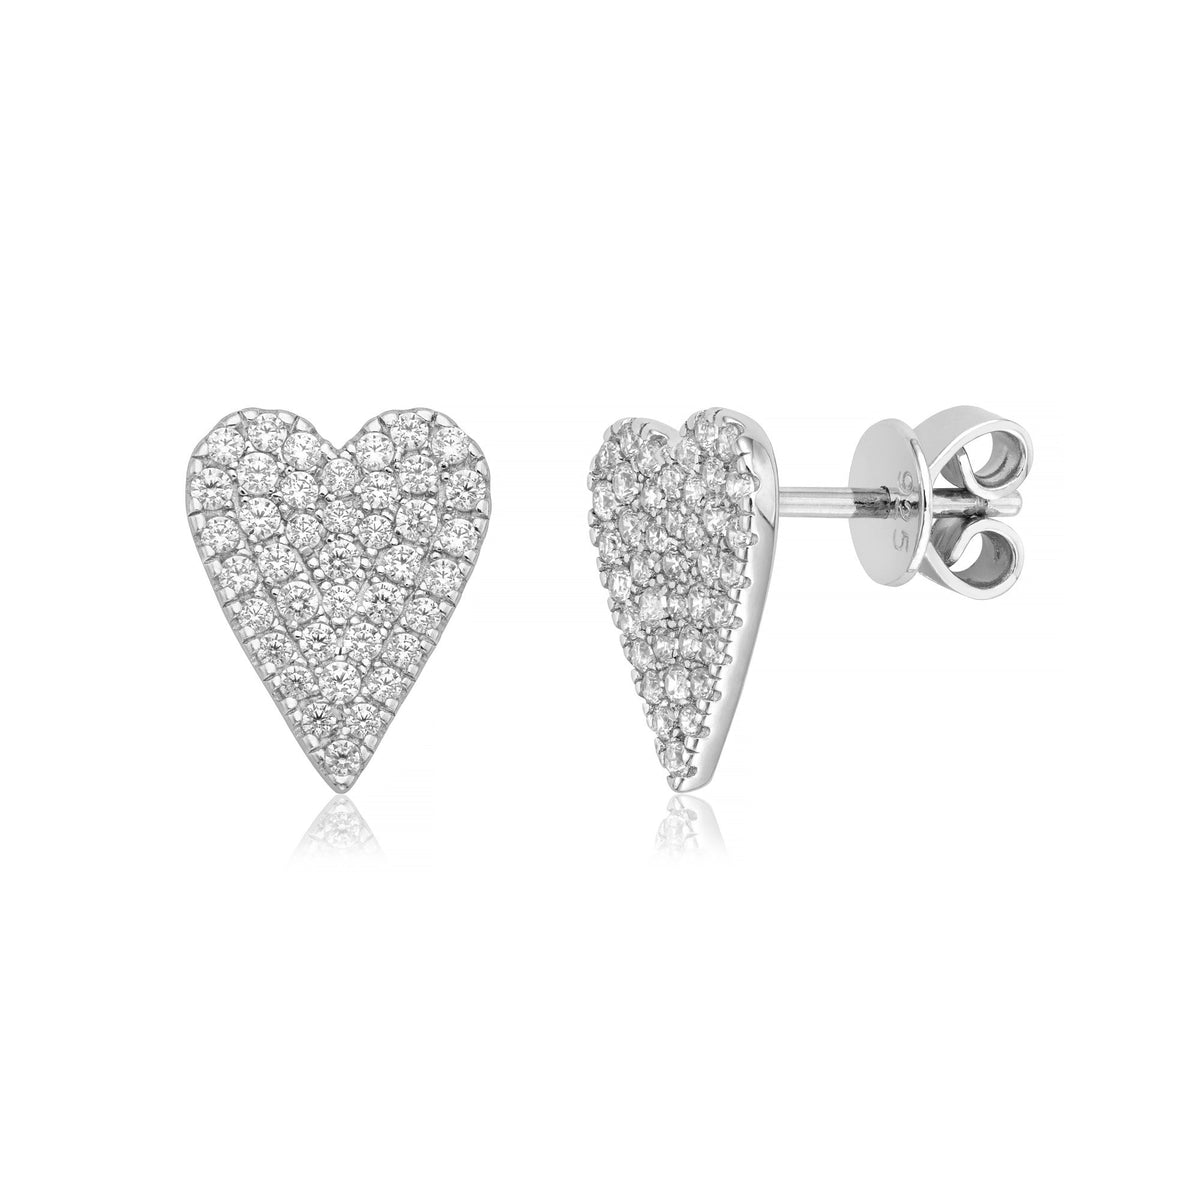 Sharp Heart Earrings in White